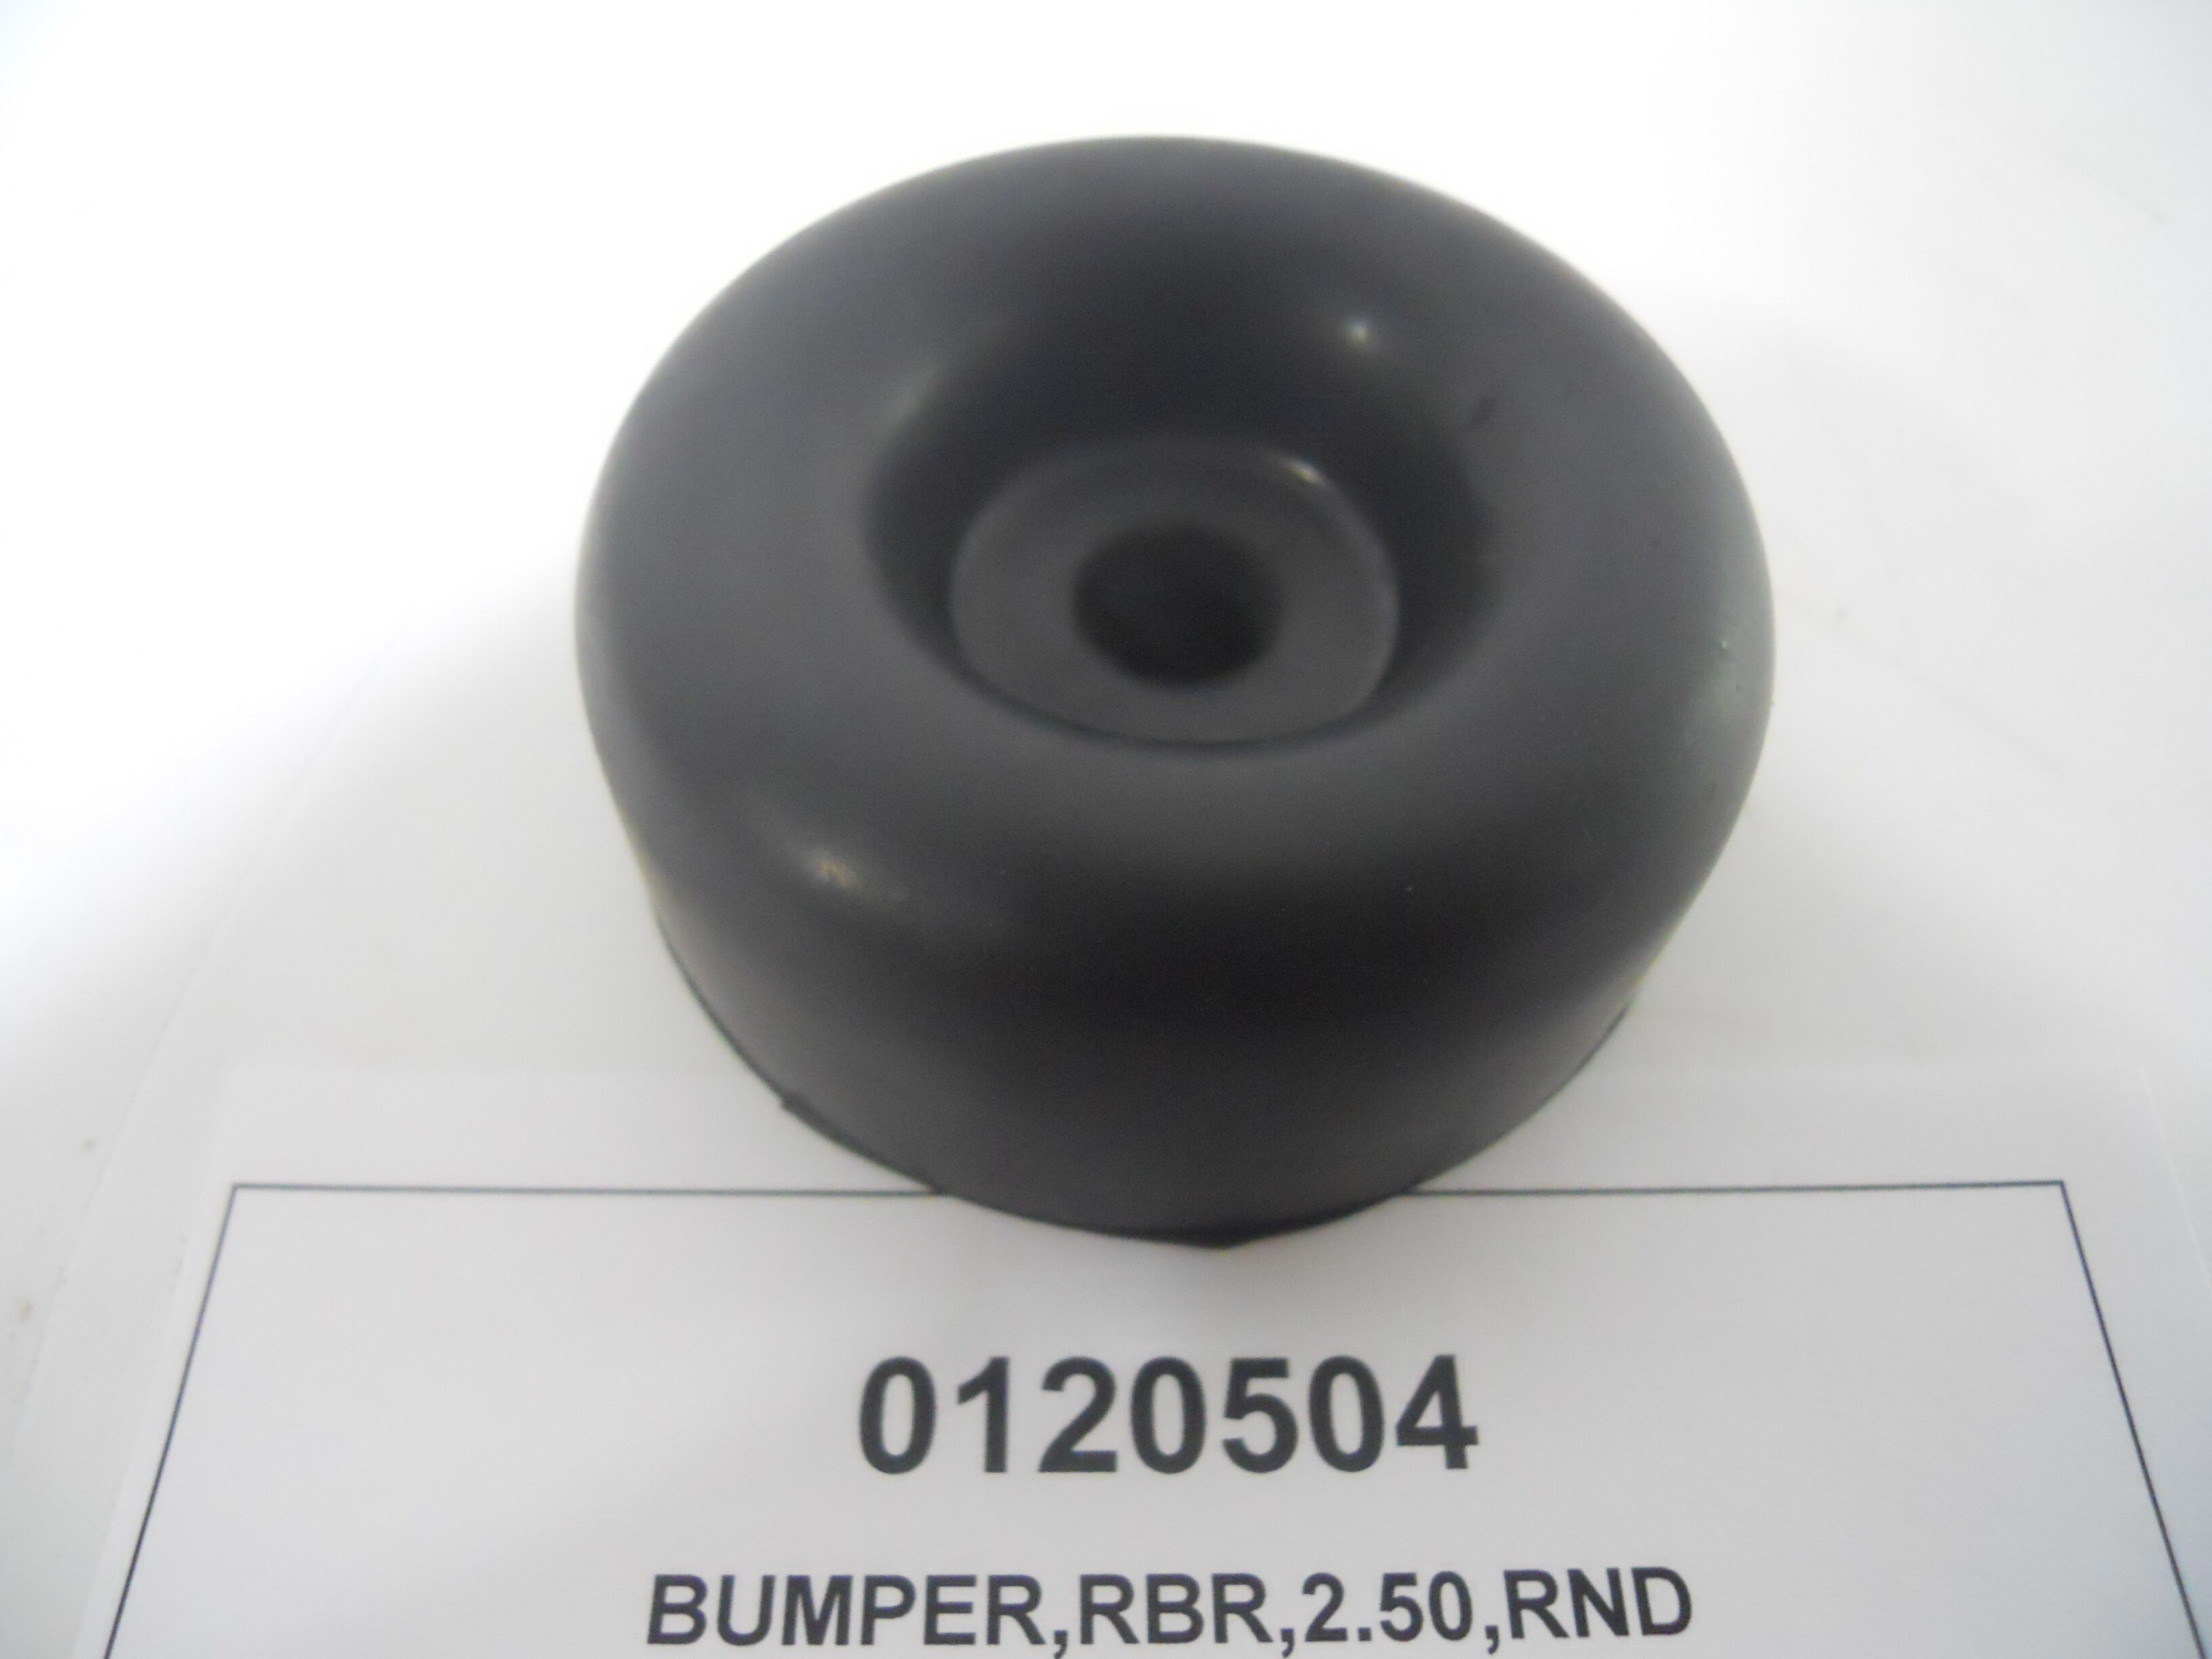 BUMPER,RBR,2.50,RND